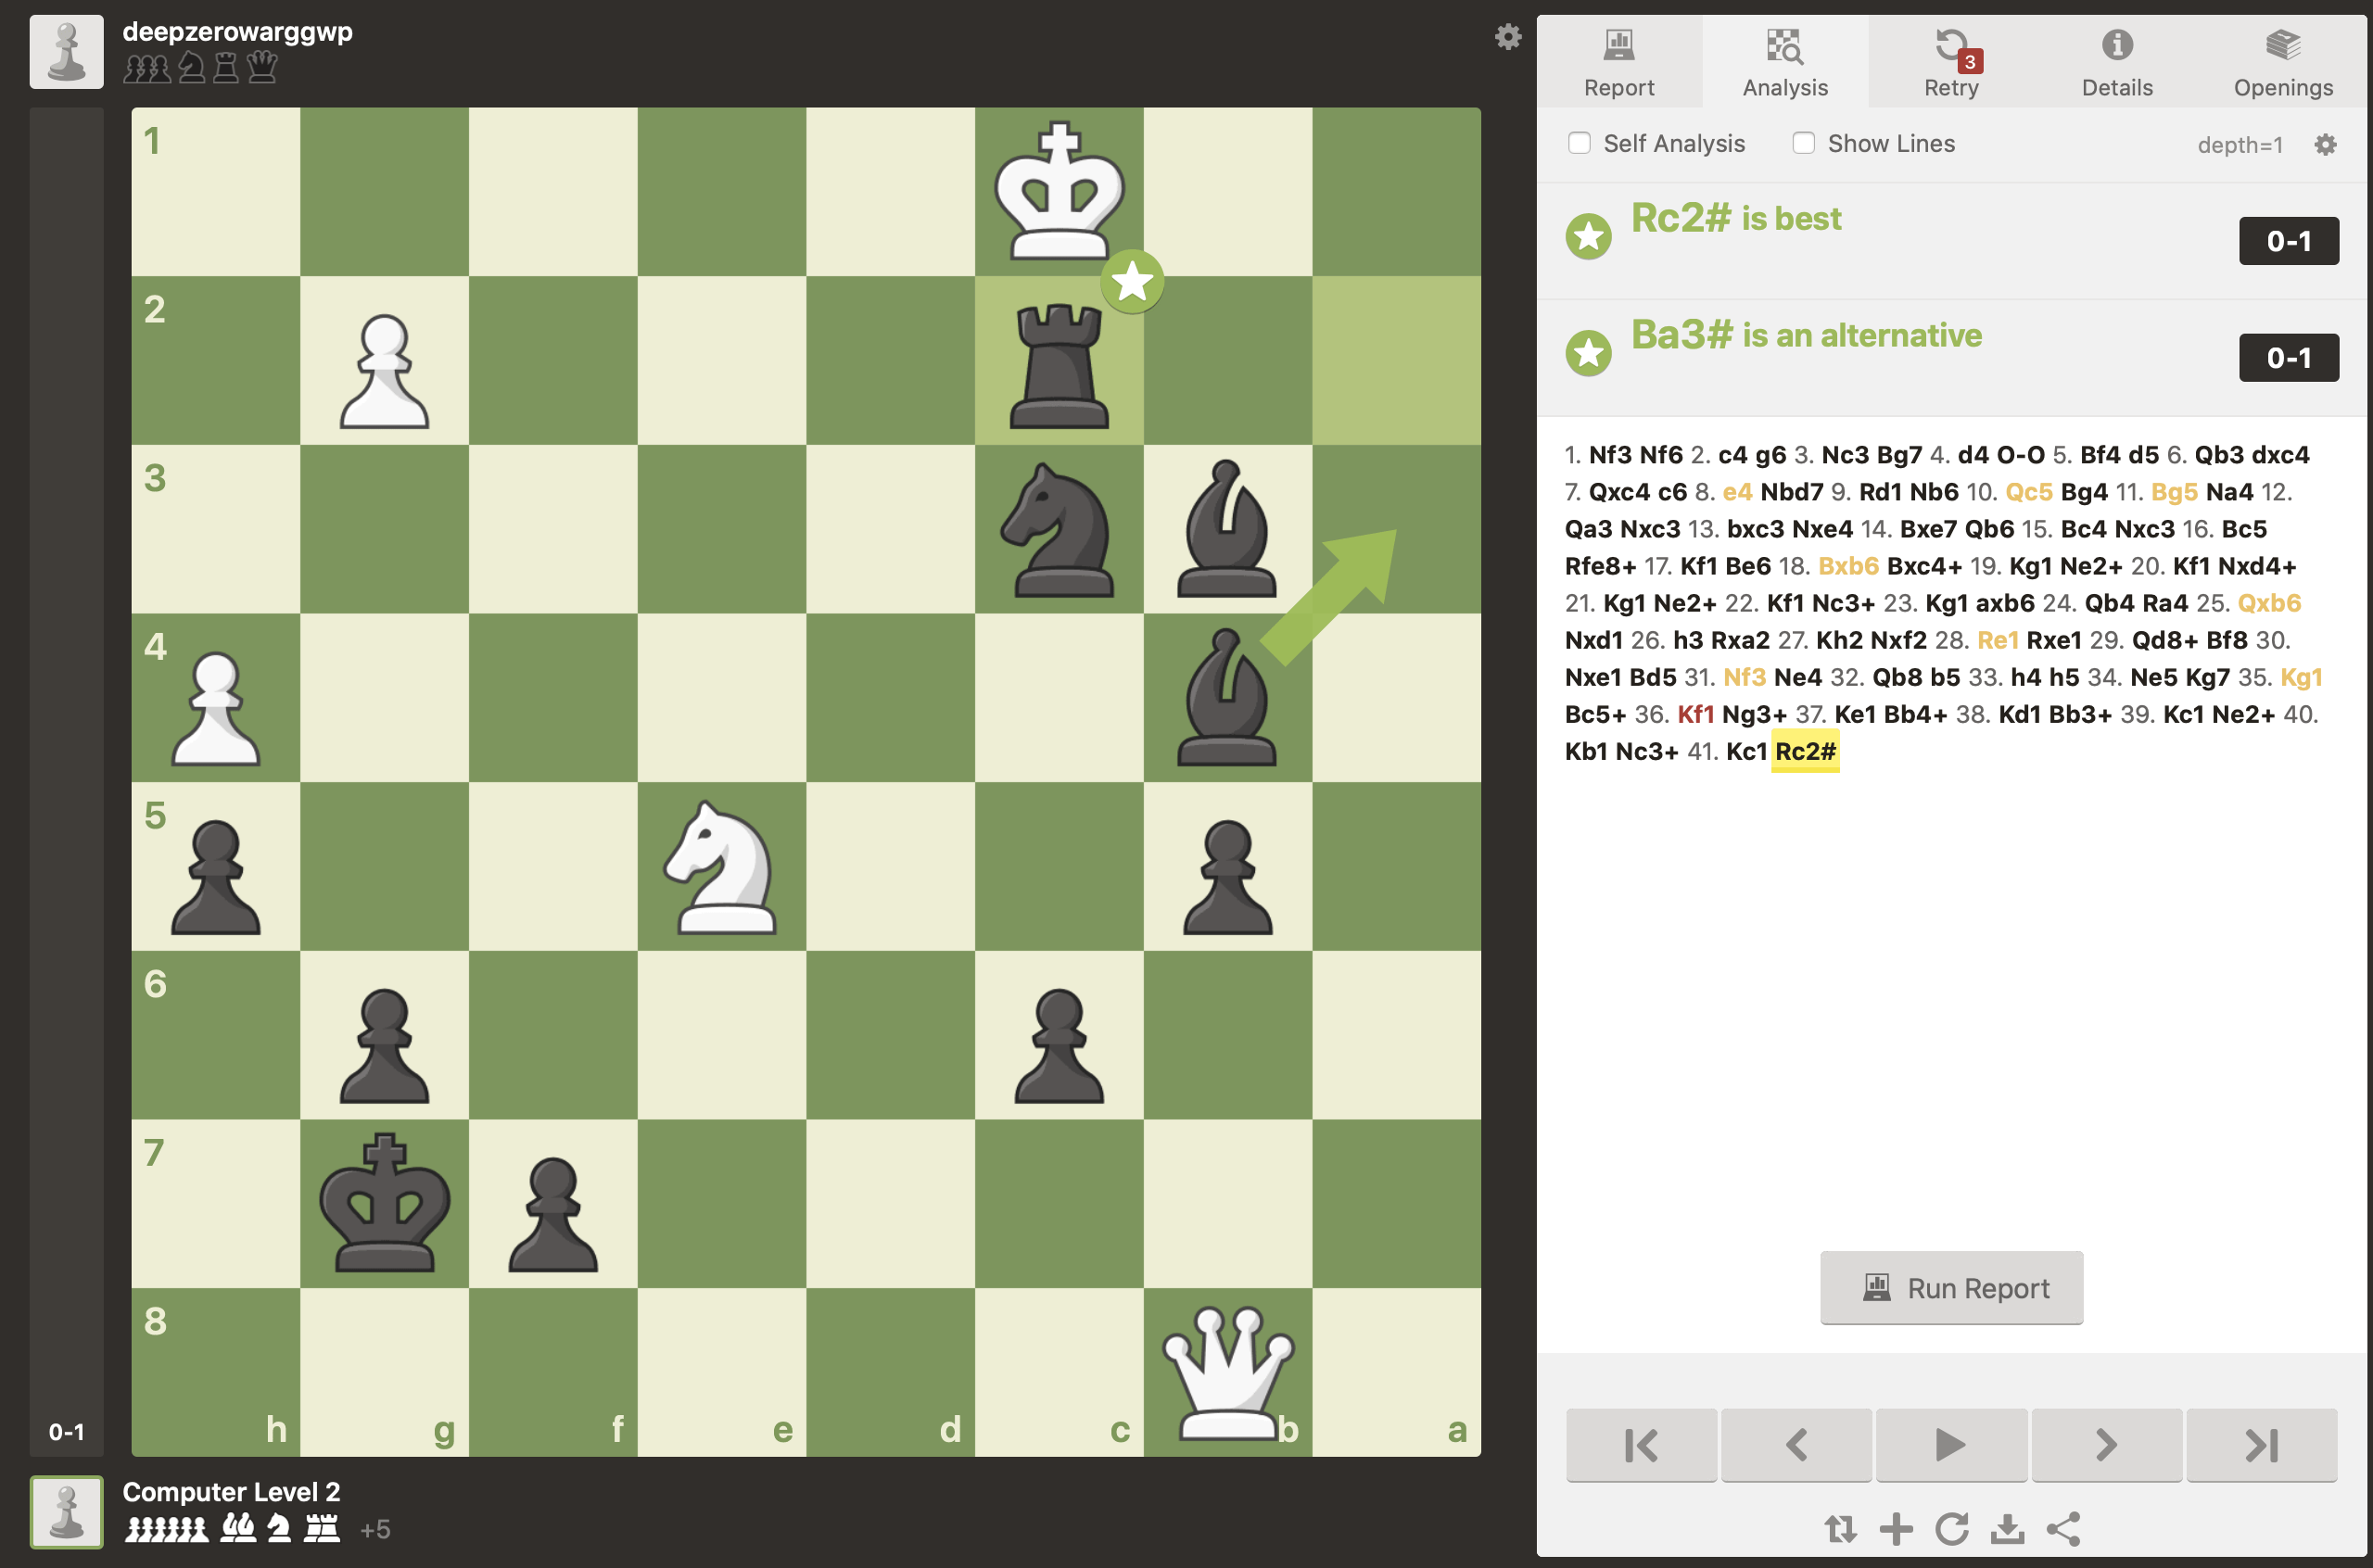 Computer analysis won't work!? - Chess Forums 